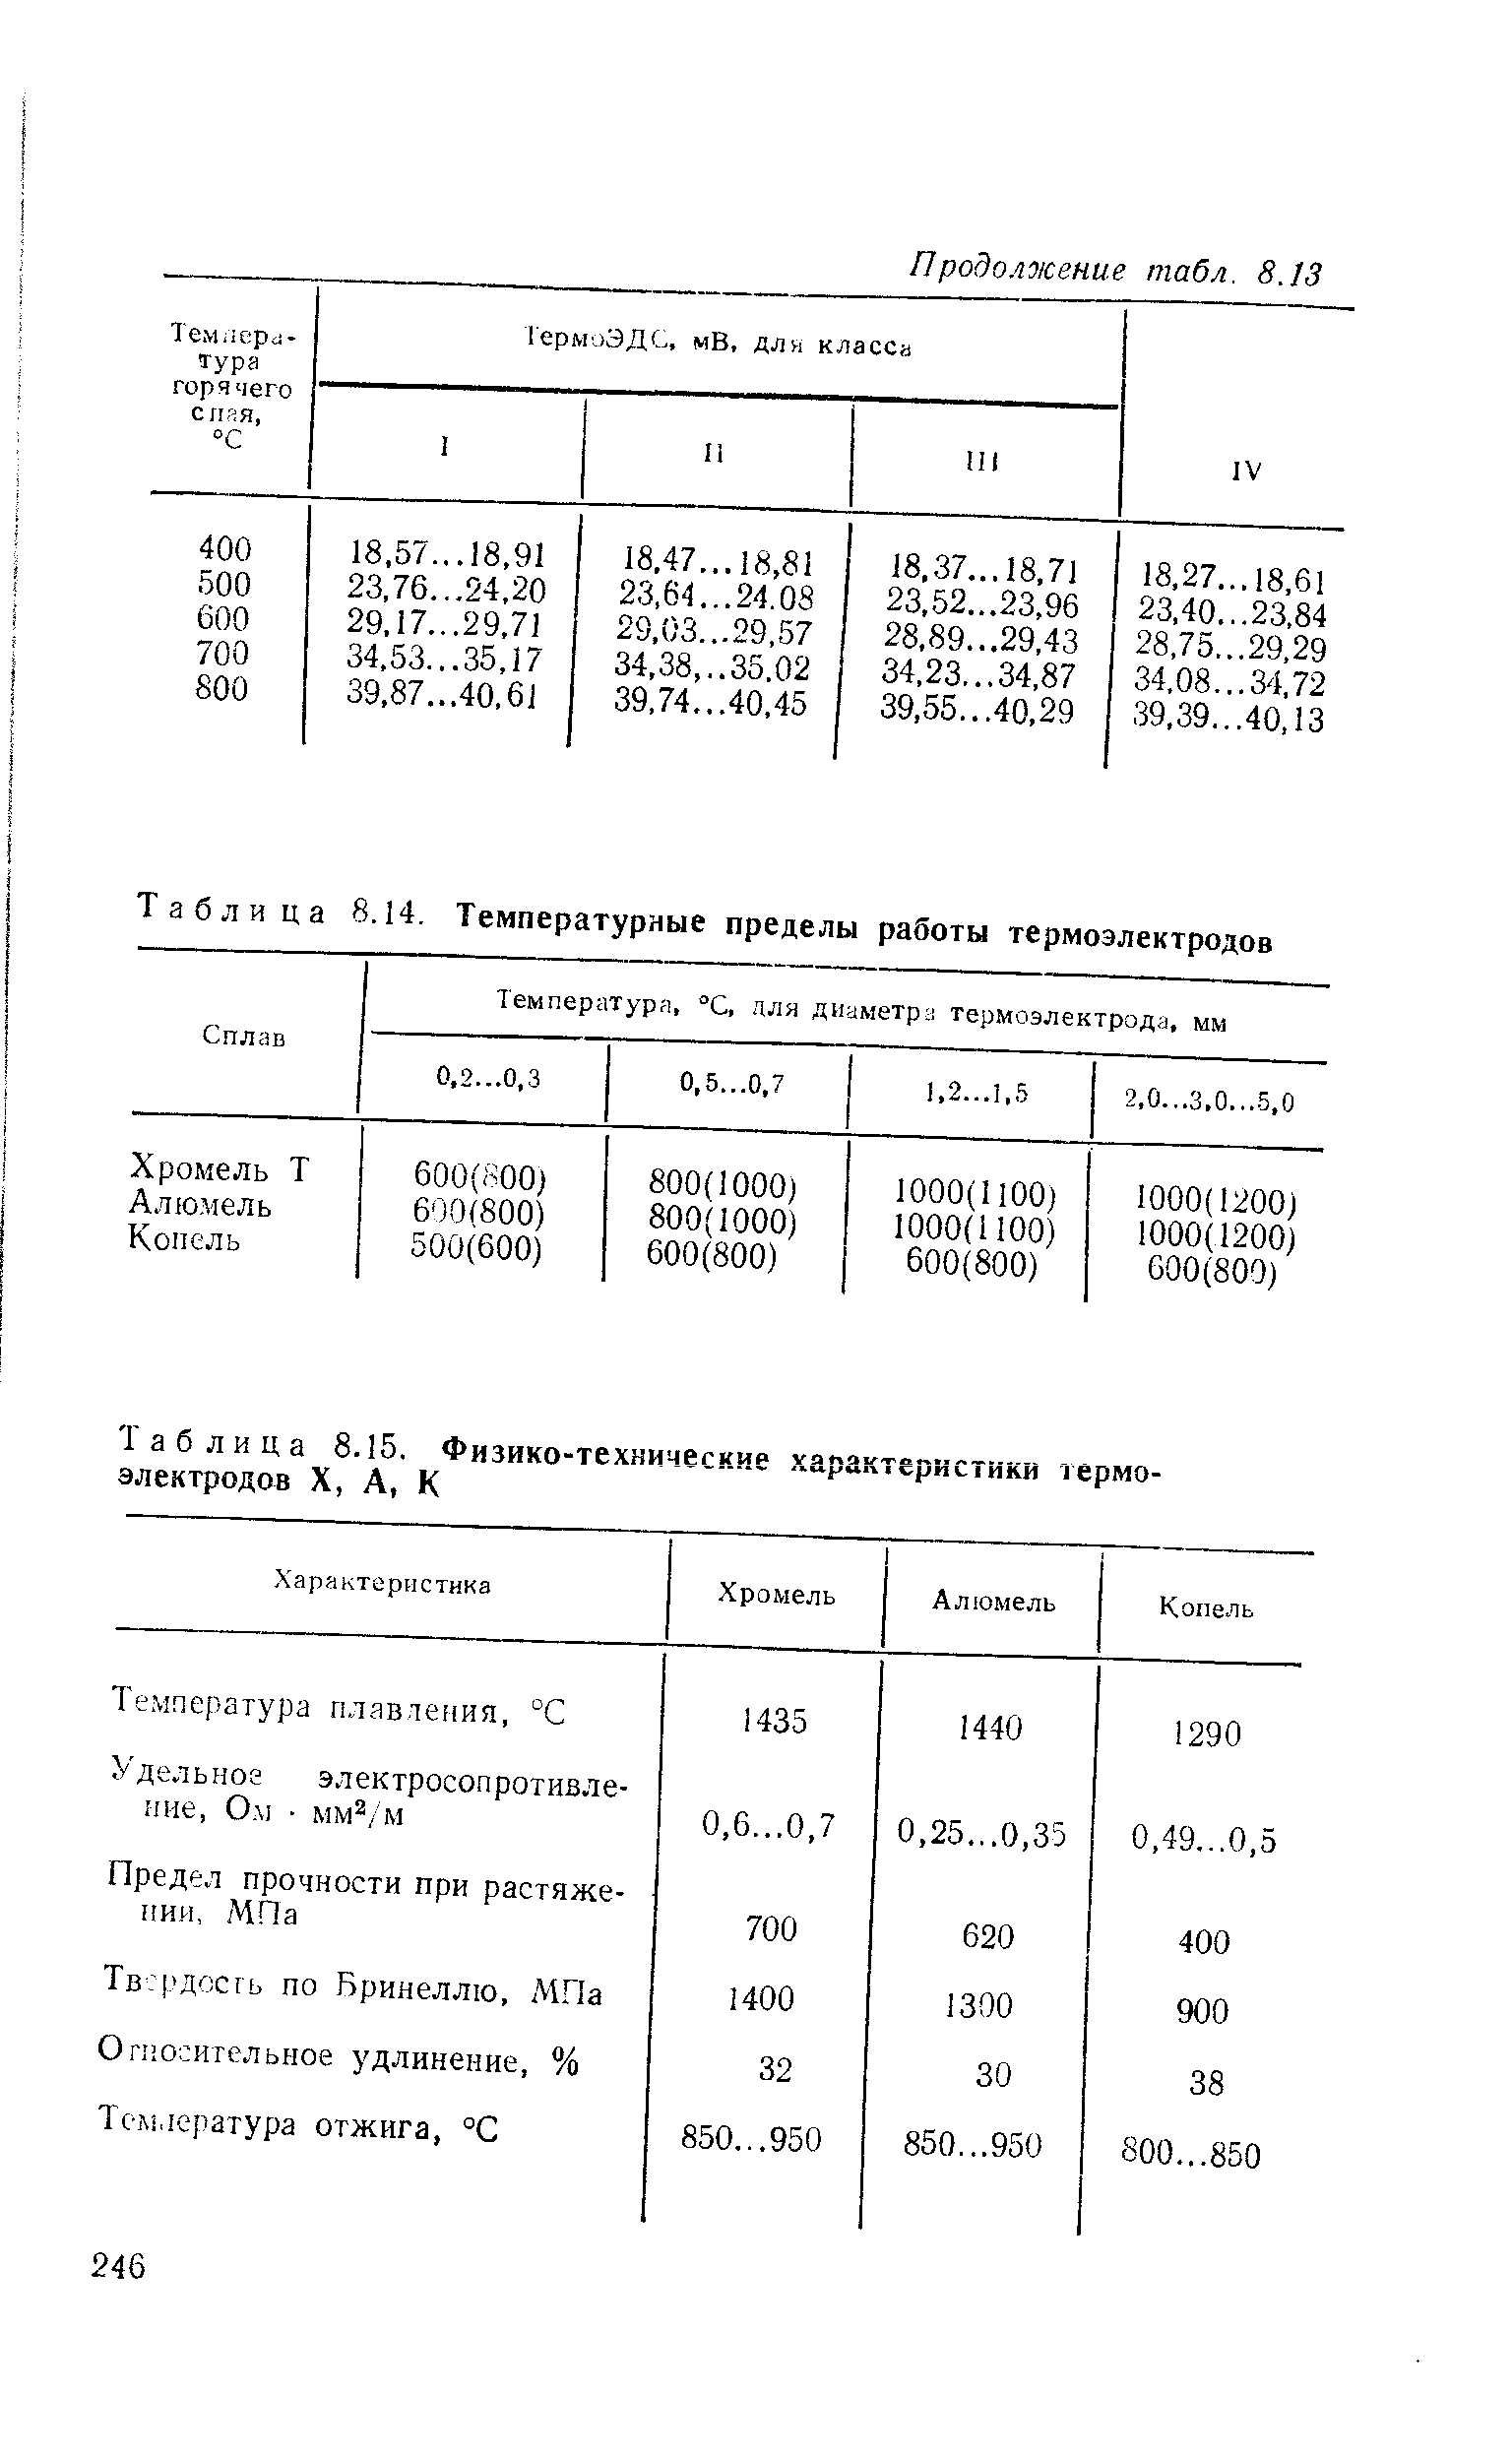 Таблица 8.15. Физико-технические характеристики термоэлектродов X, А, К
